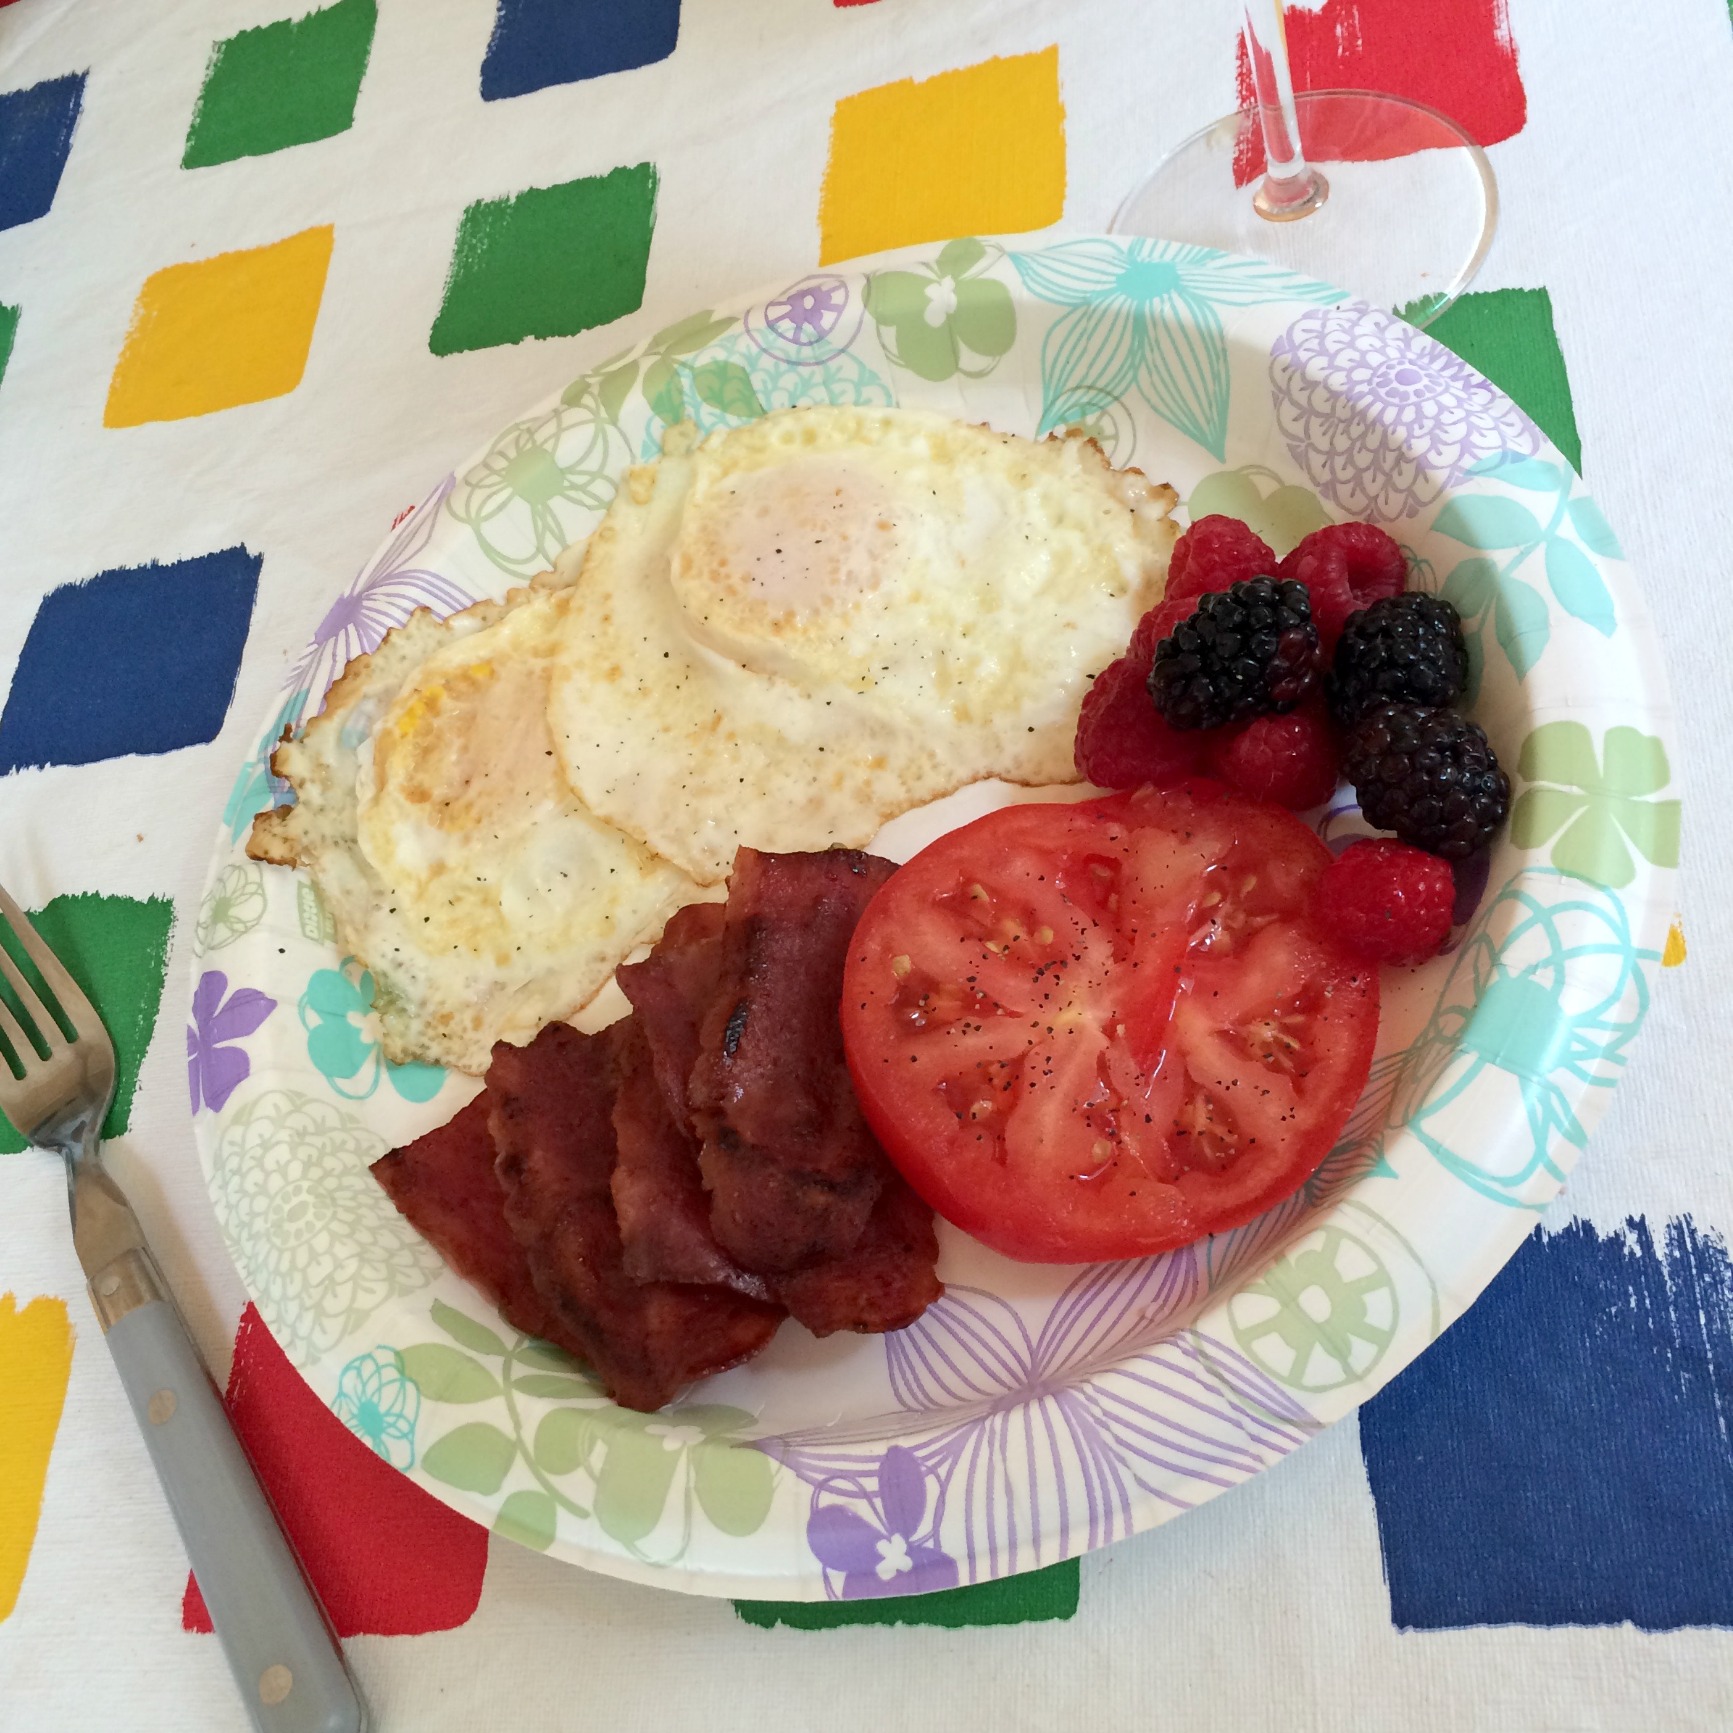 healthy breakfast on vacation